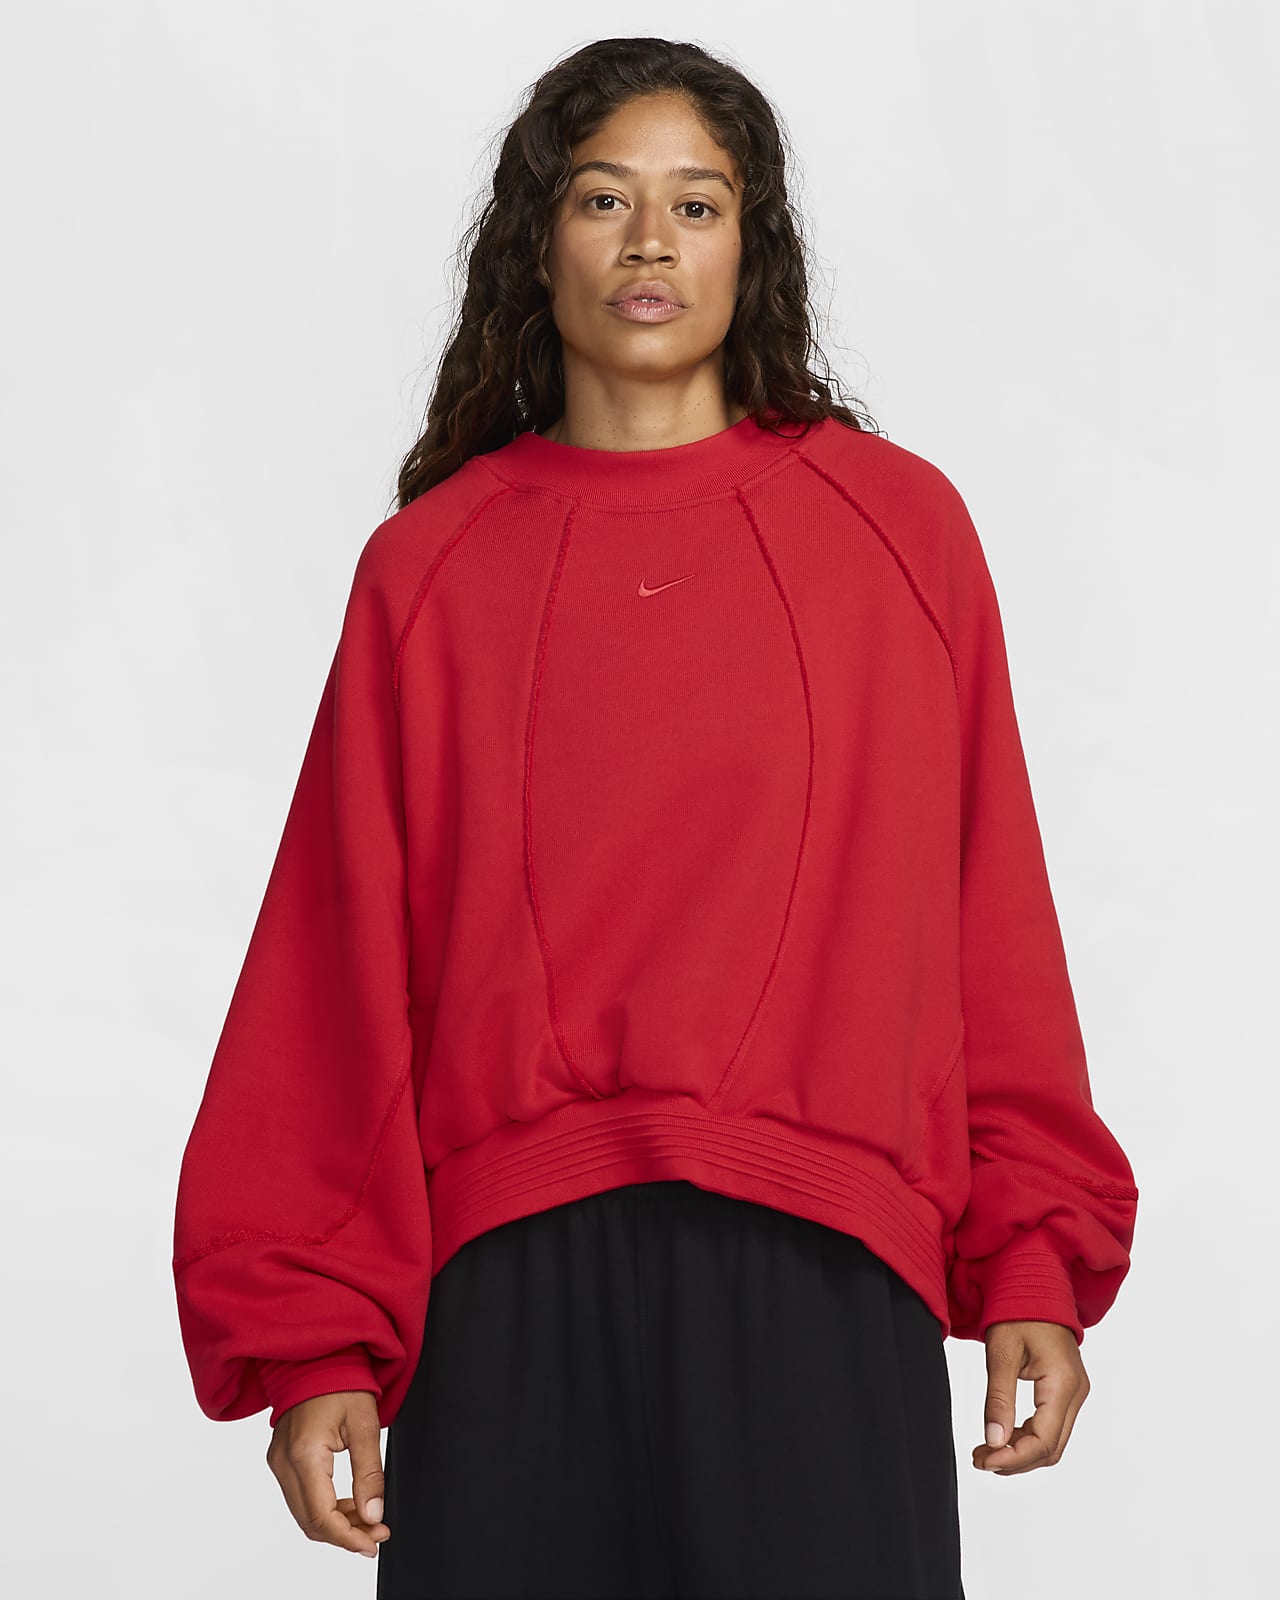 Nike Sportswear Collection Women's Oversized Crew-Neck French Terry Sweatshirt